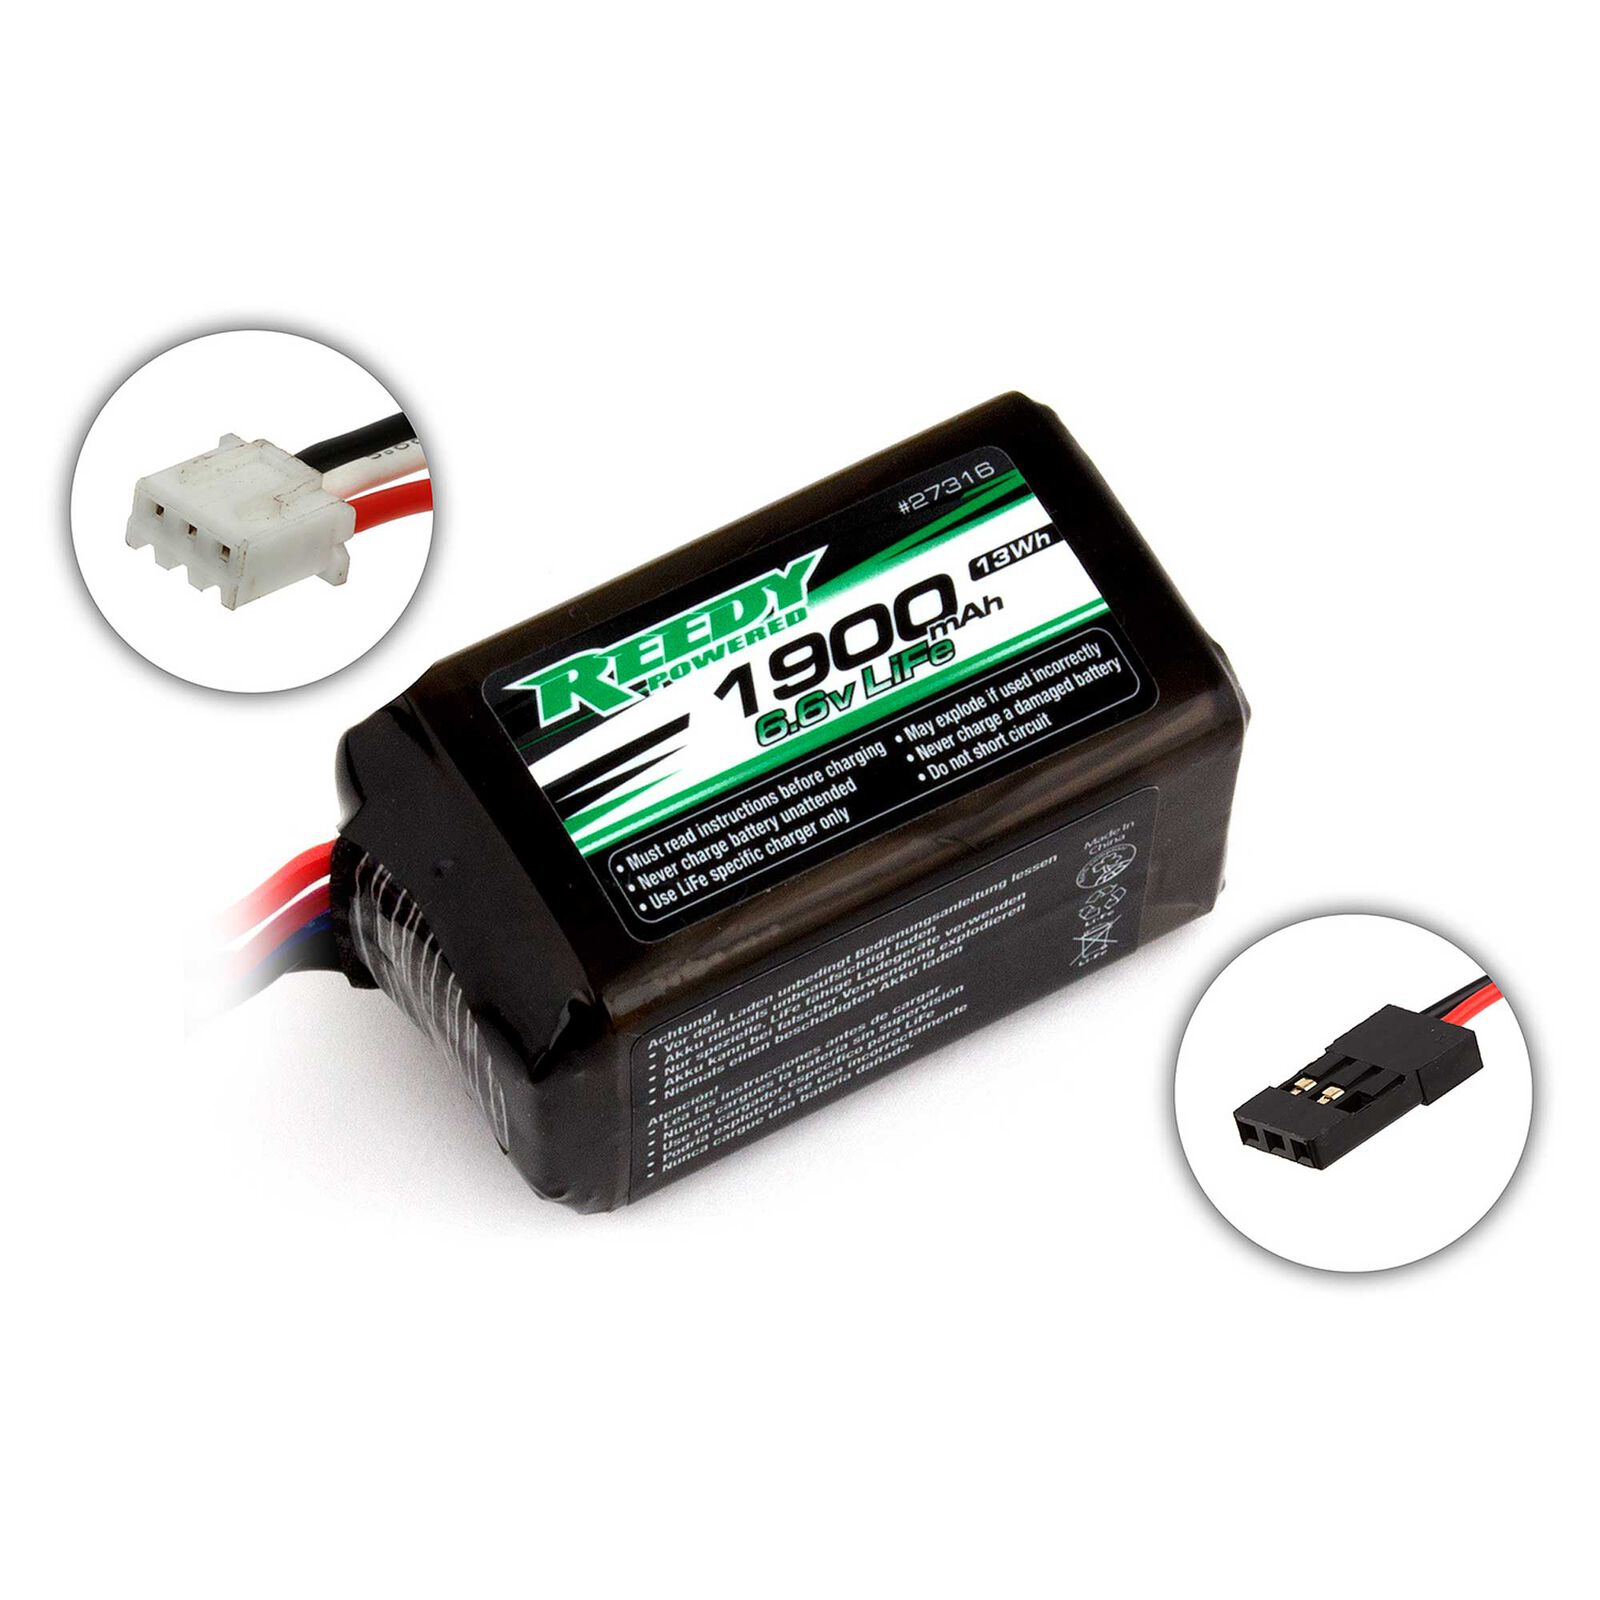 6.6V 1900mAh 2S Reedy LiFe Receiver Battery: Universal Receiver